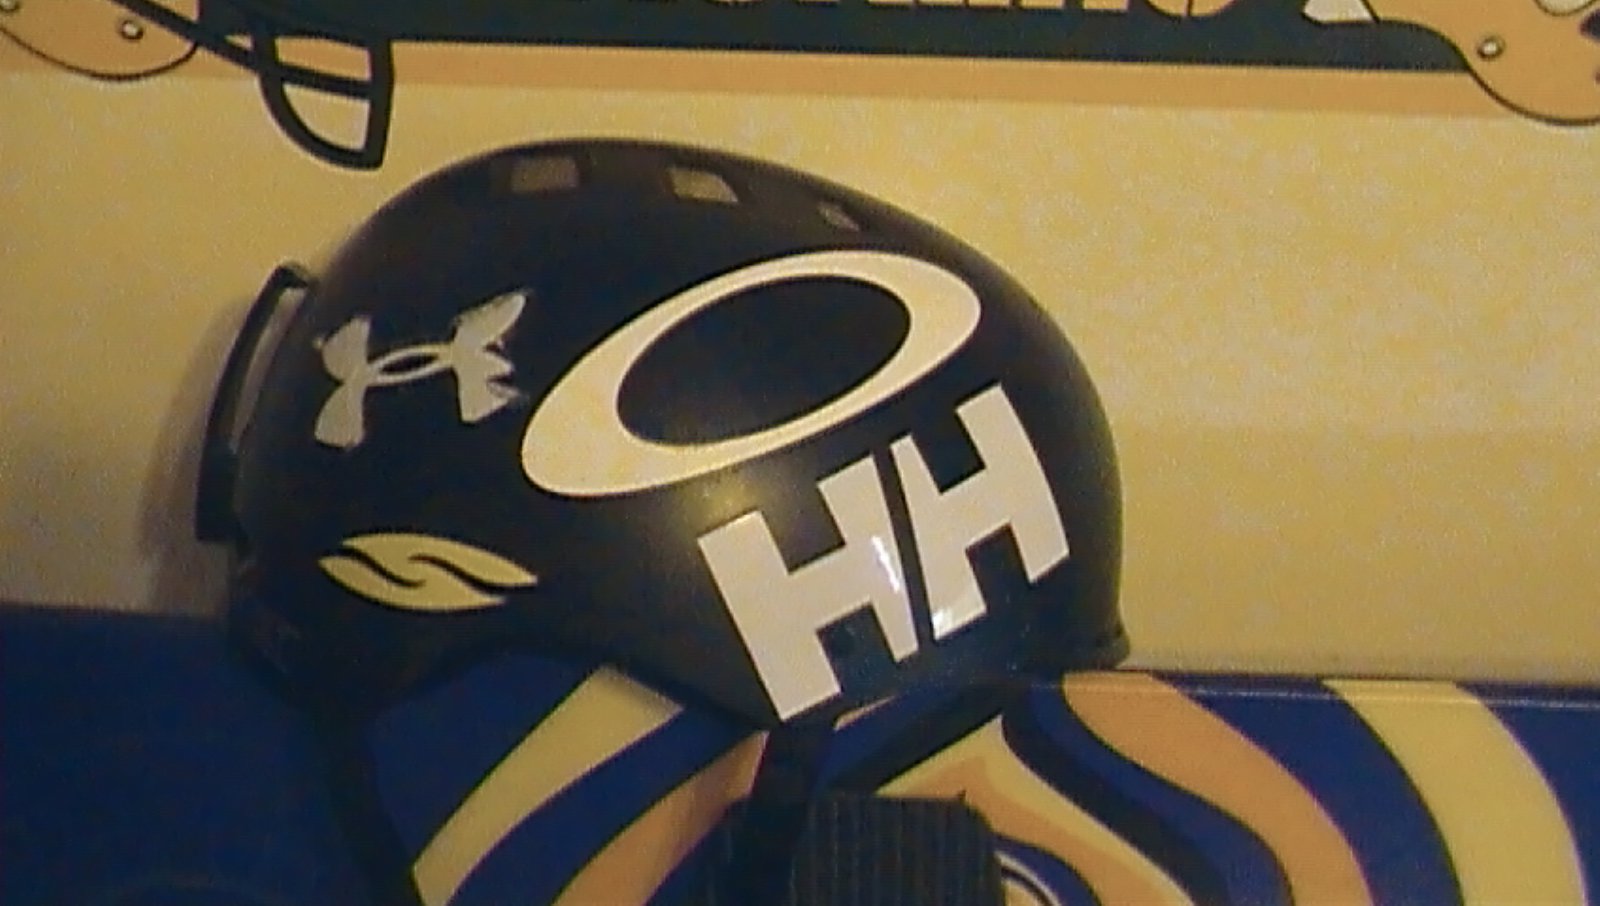 Smith holt helmet - 2 of 2